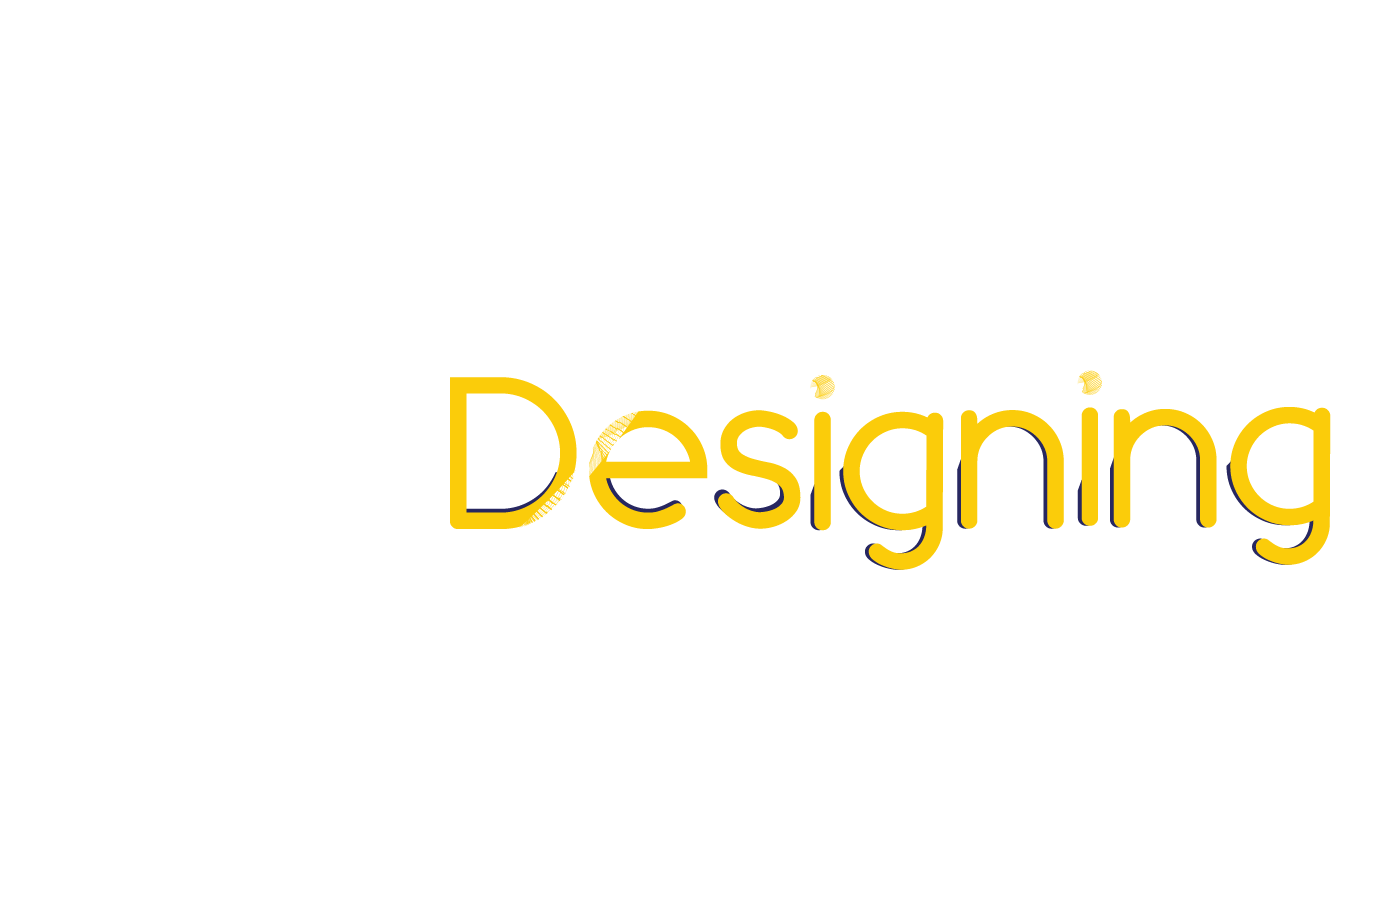 Web Designing Hyderabad